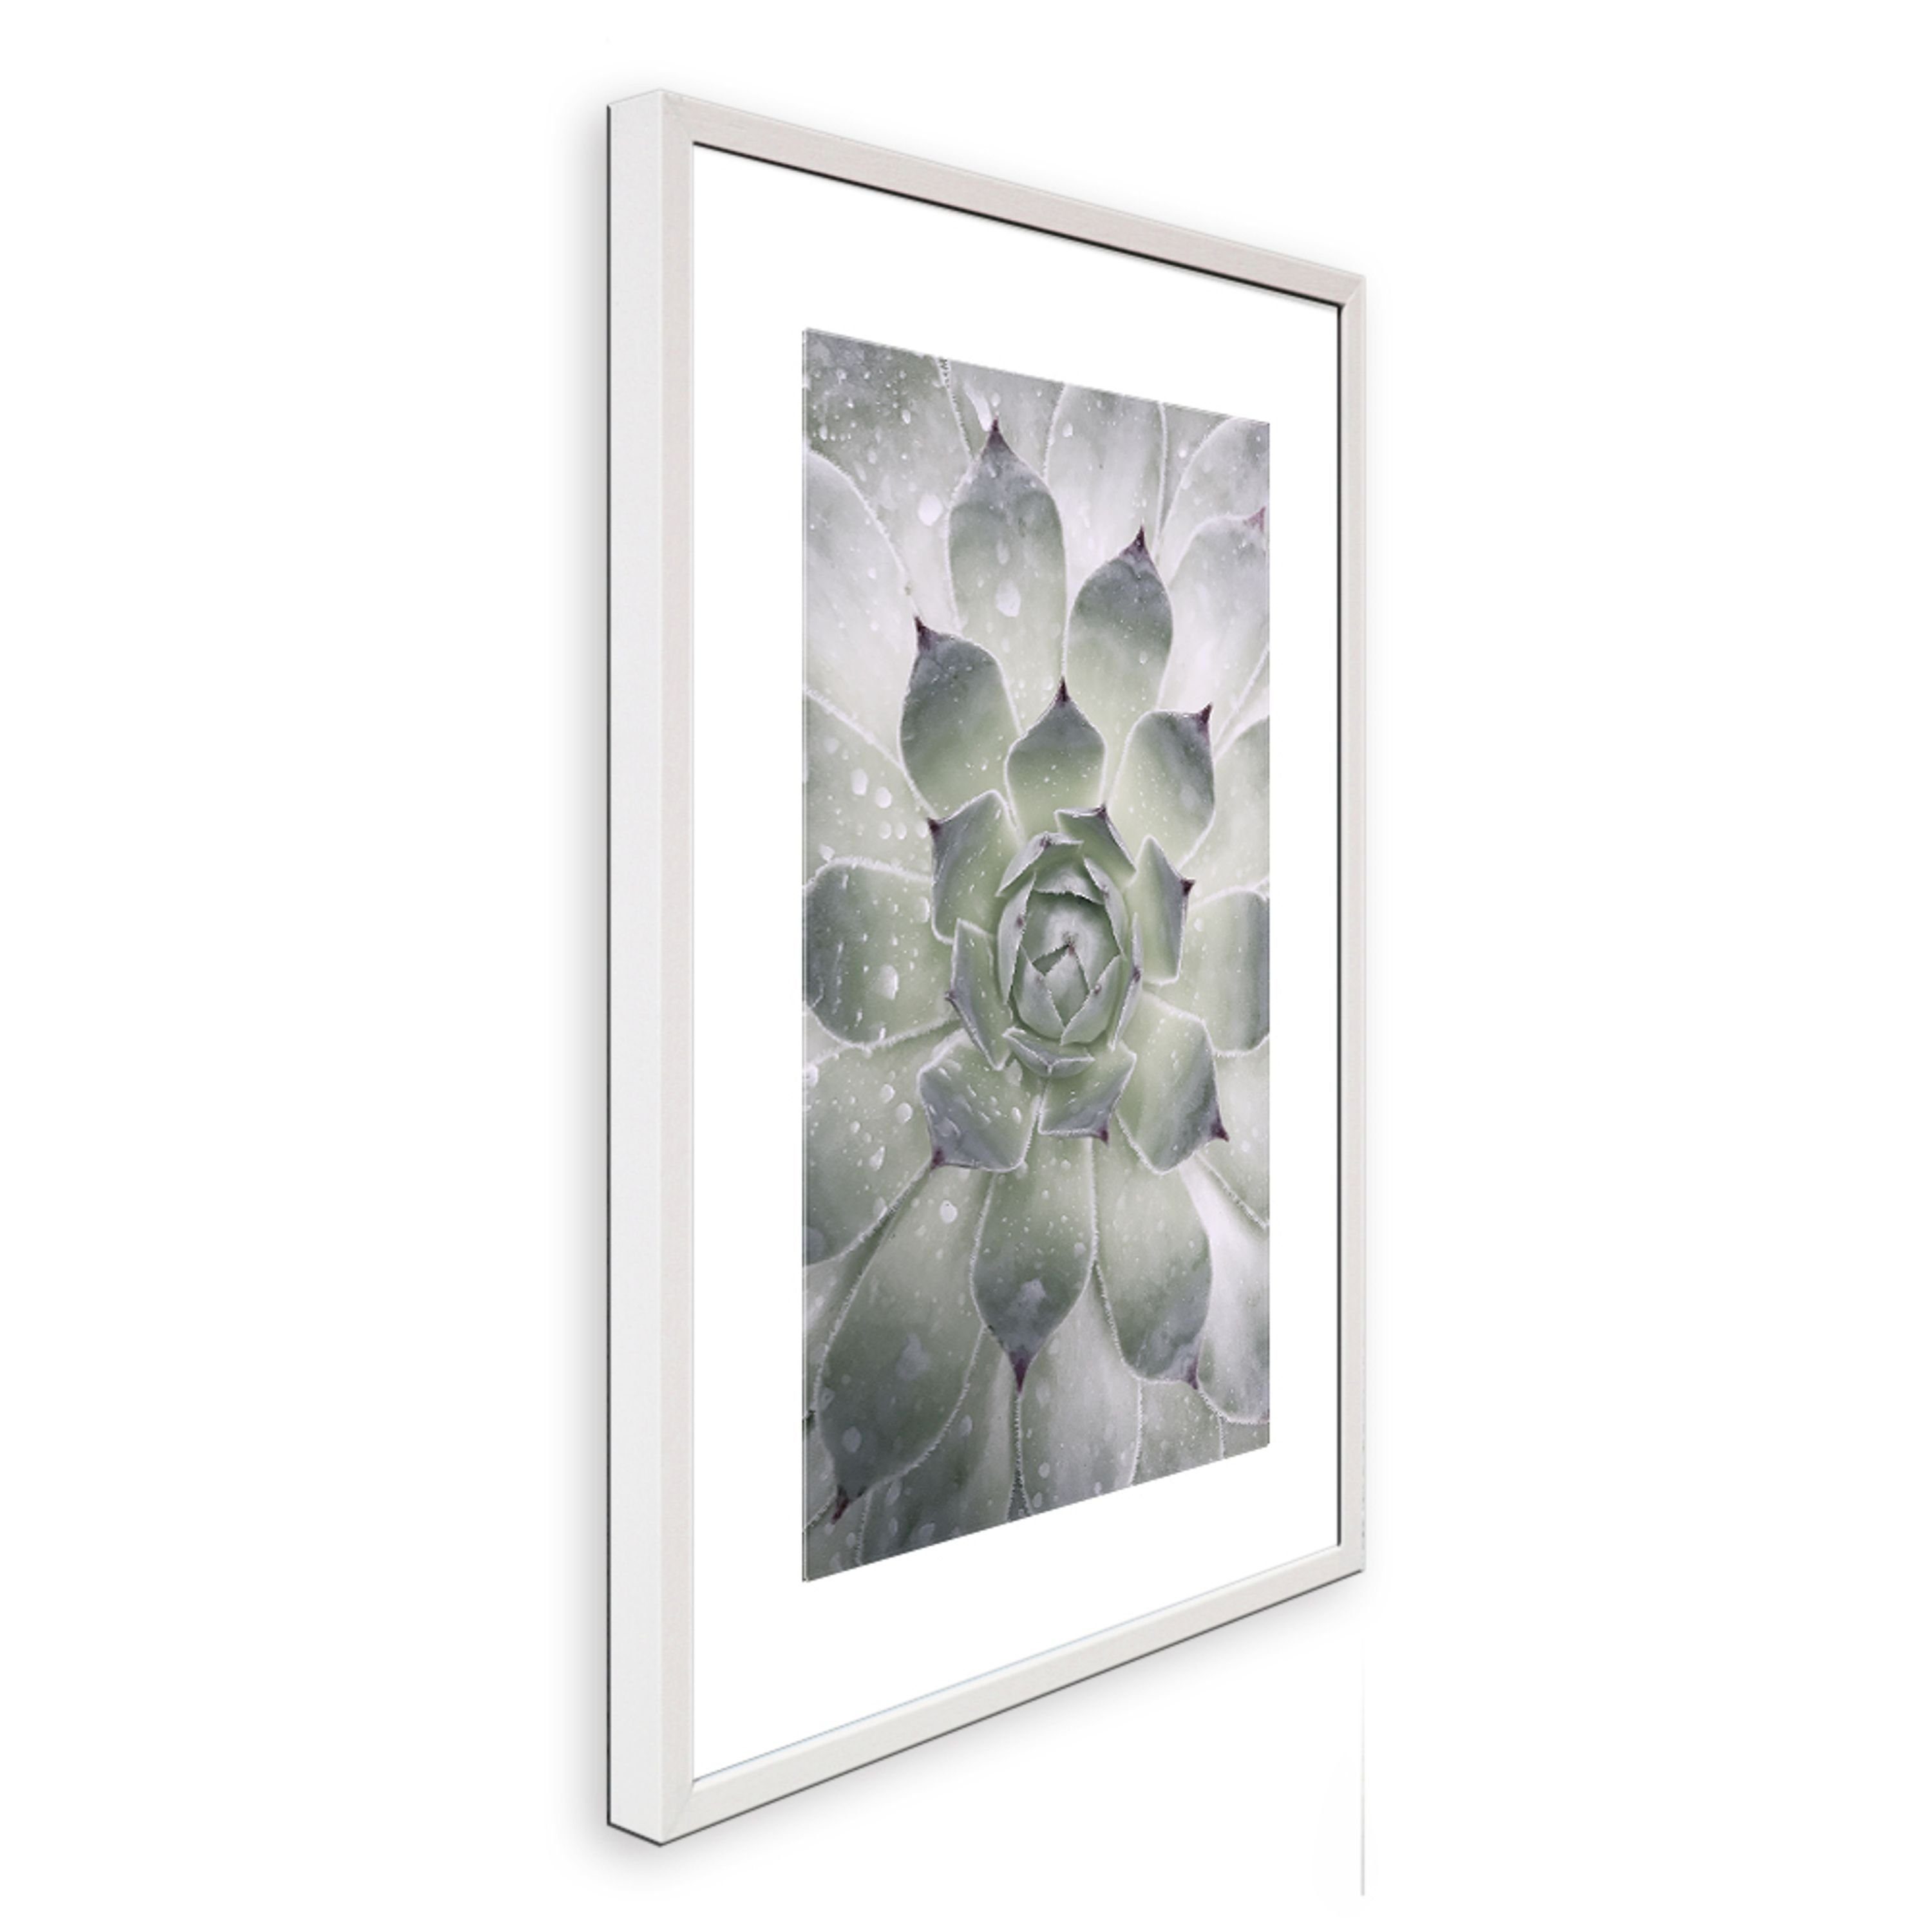 Rahmen artissimo Kaktus Bild mit / Tropisches / mit Blatt gerahmt Bild Wandbild, / Design-Poster Holz-Rahmen 51x71cm